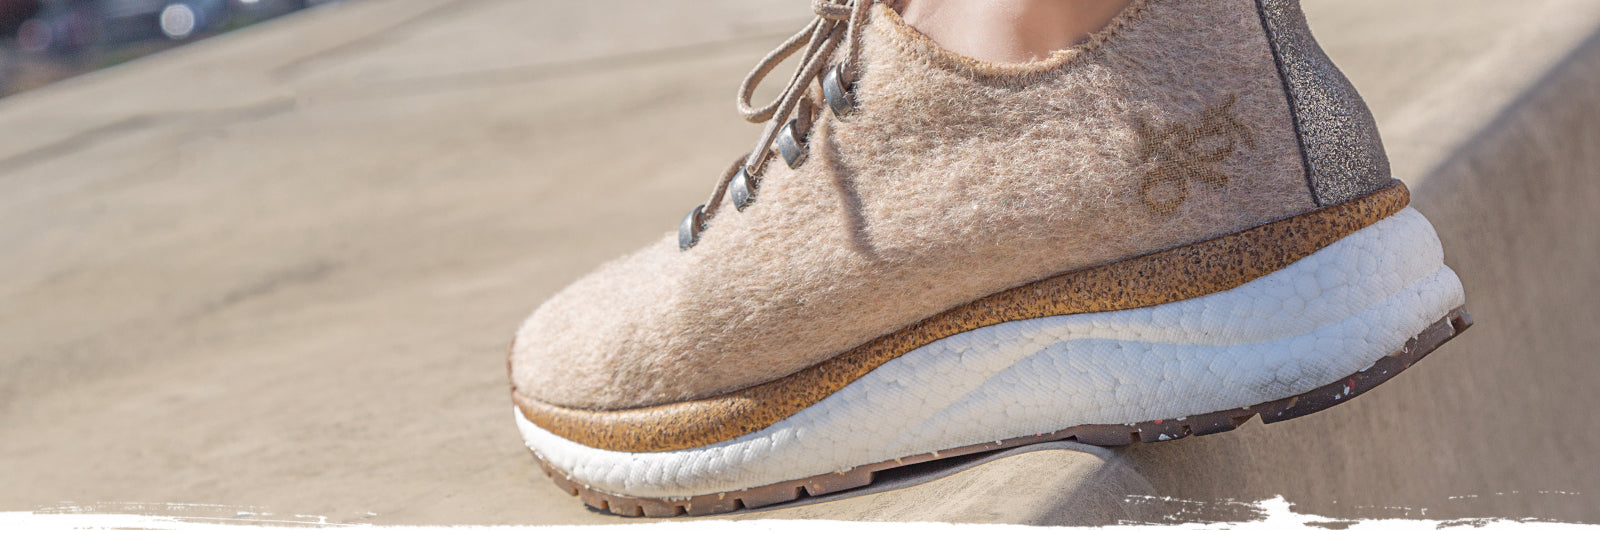 sustainable fashion footwear | step lite foam by travel lite sneakers